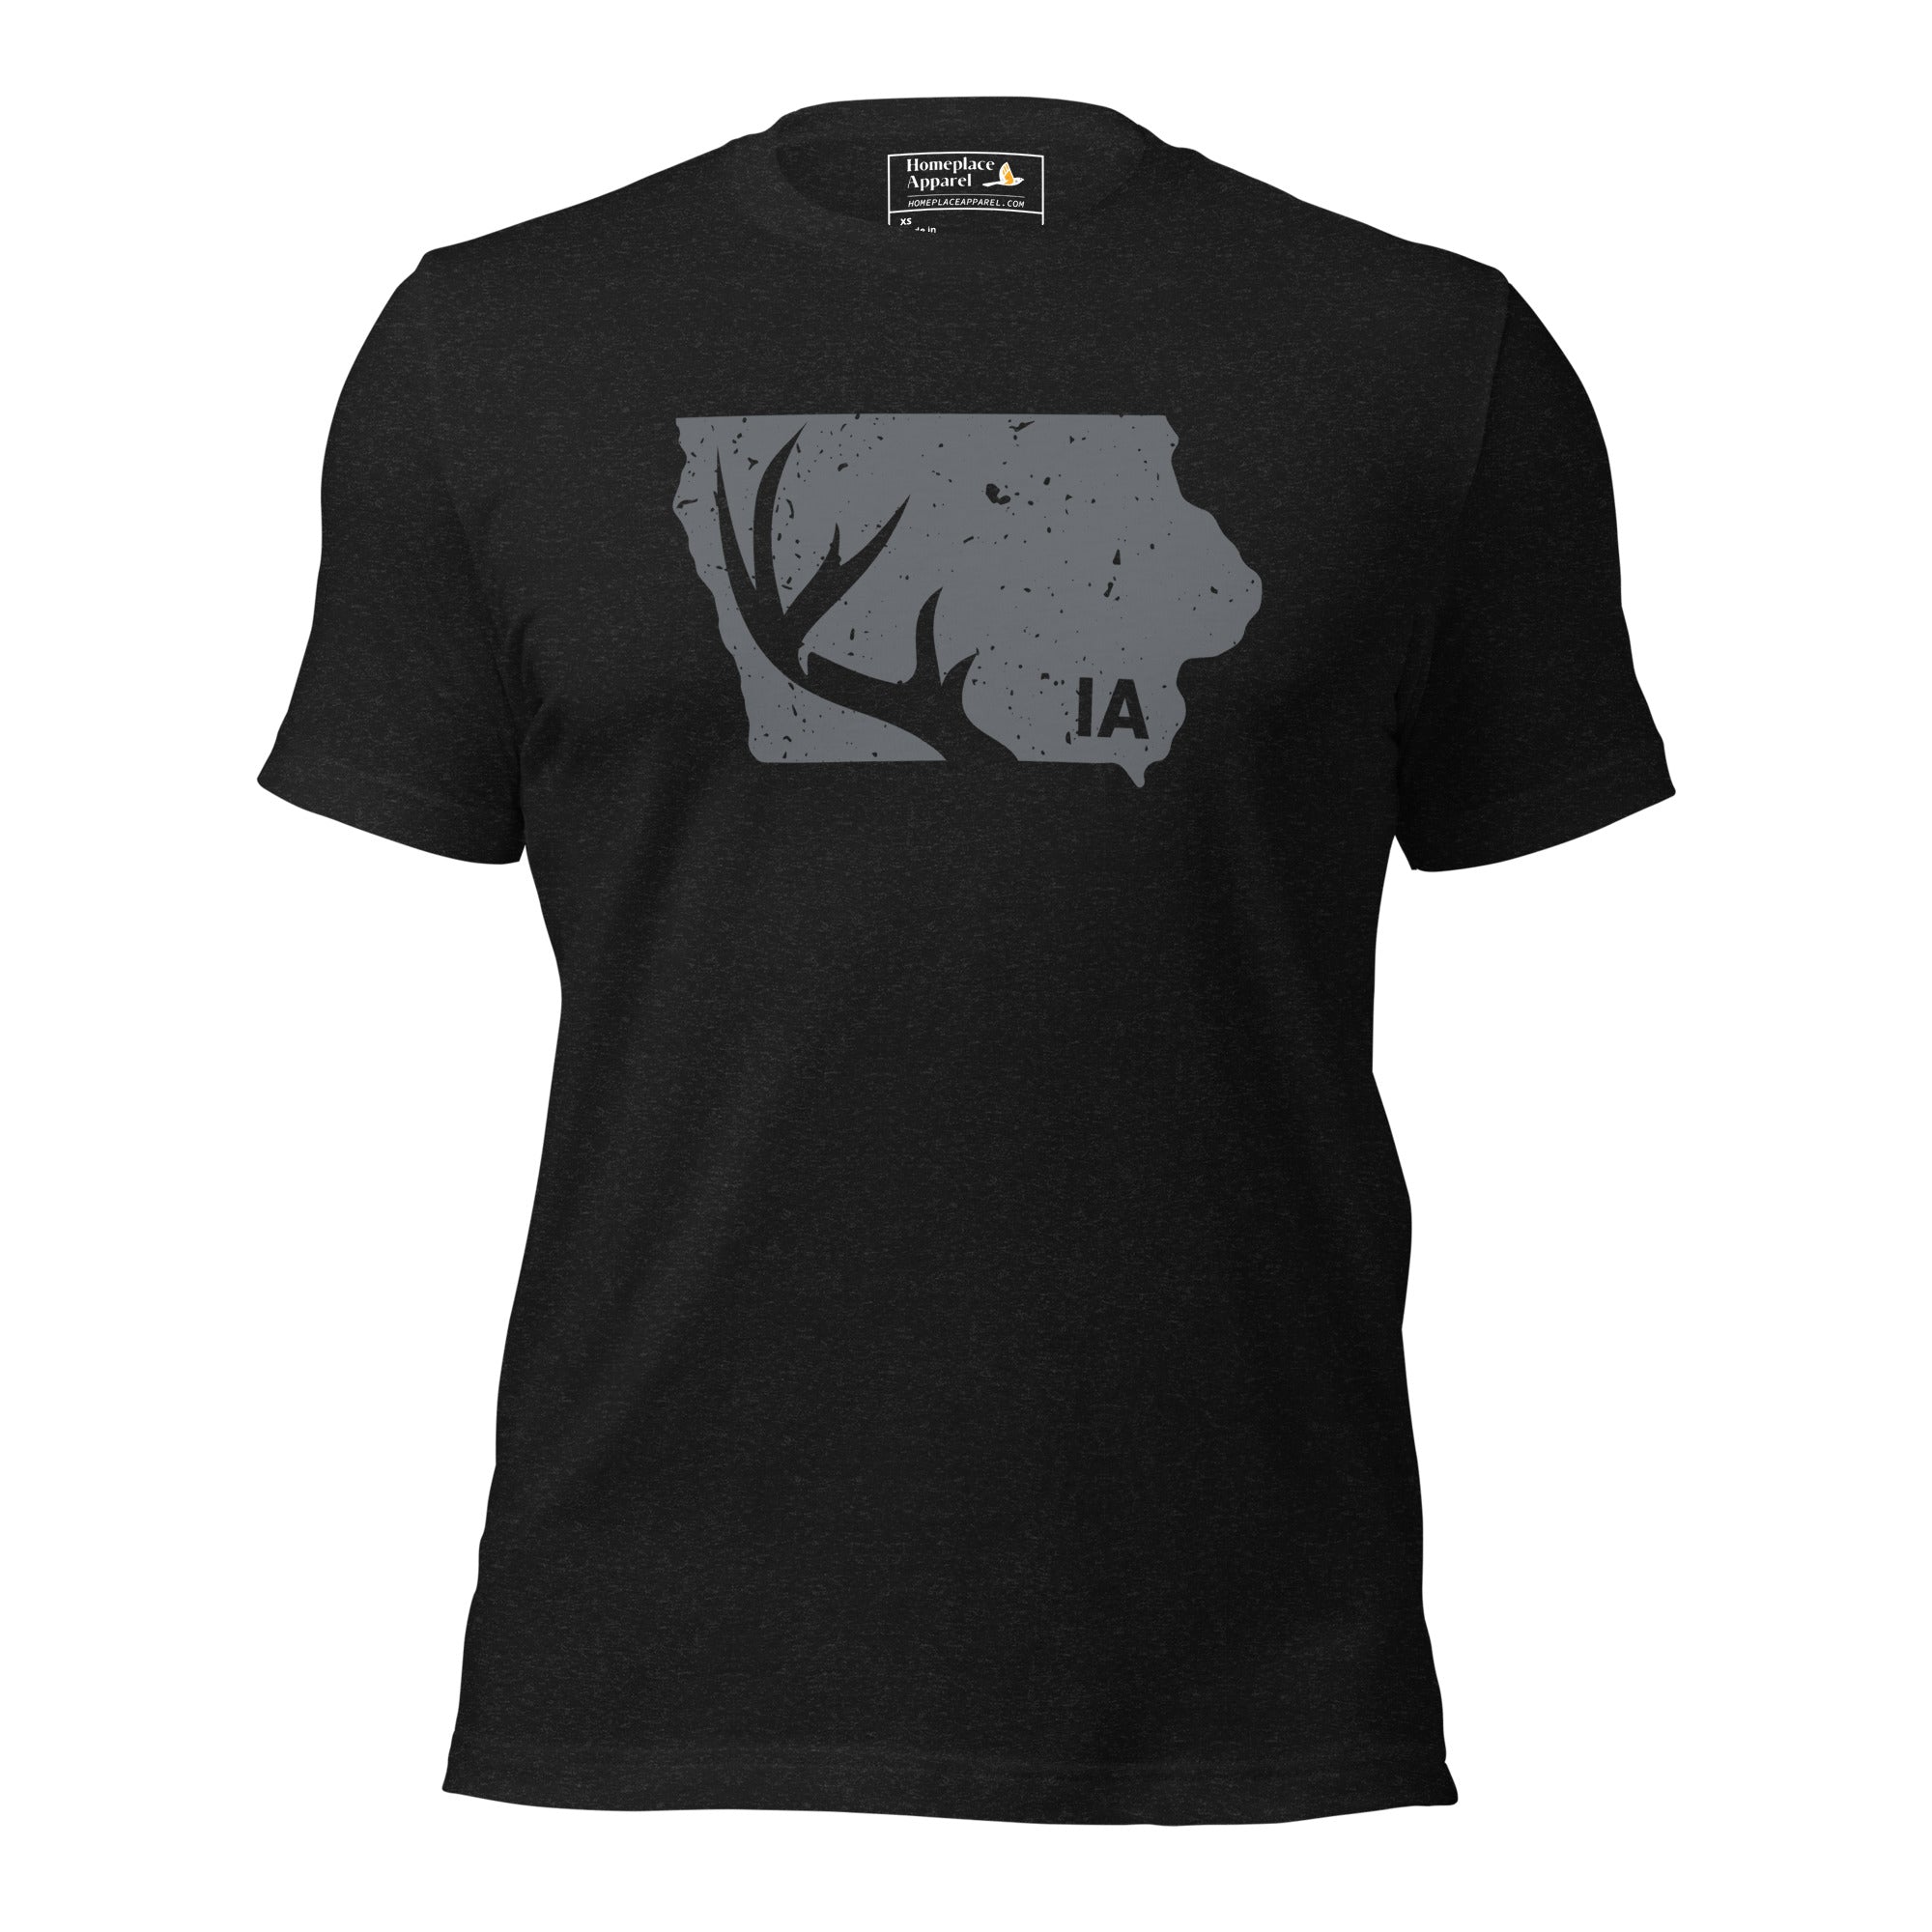 unisex-staple-t-shirt-black-heather-front-650321a67e4b8.jpg